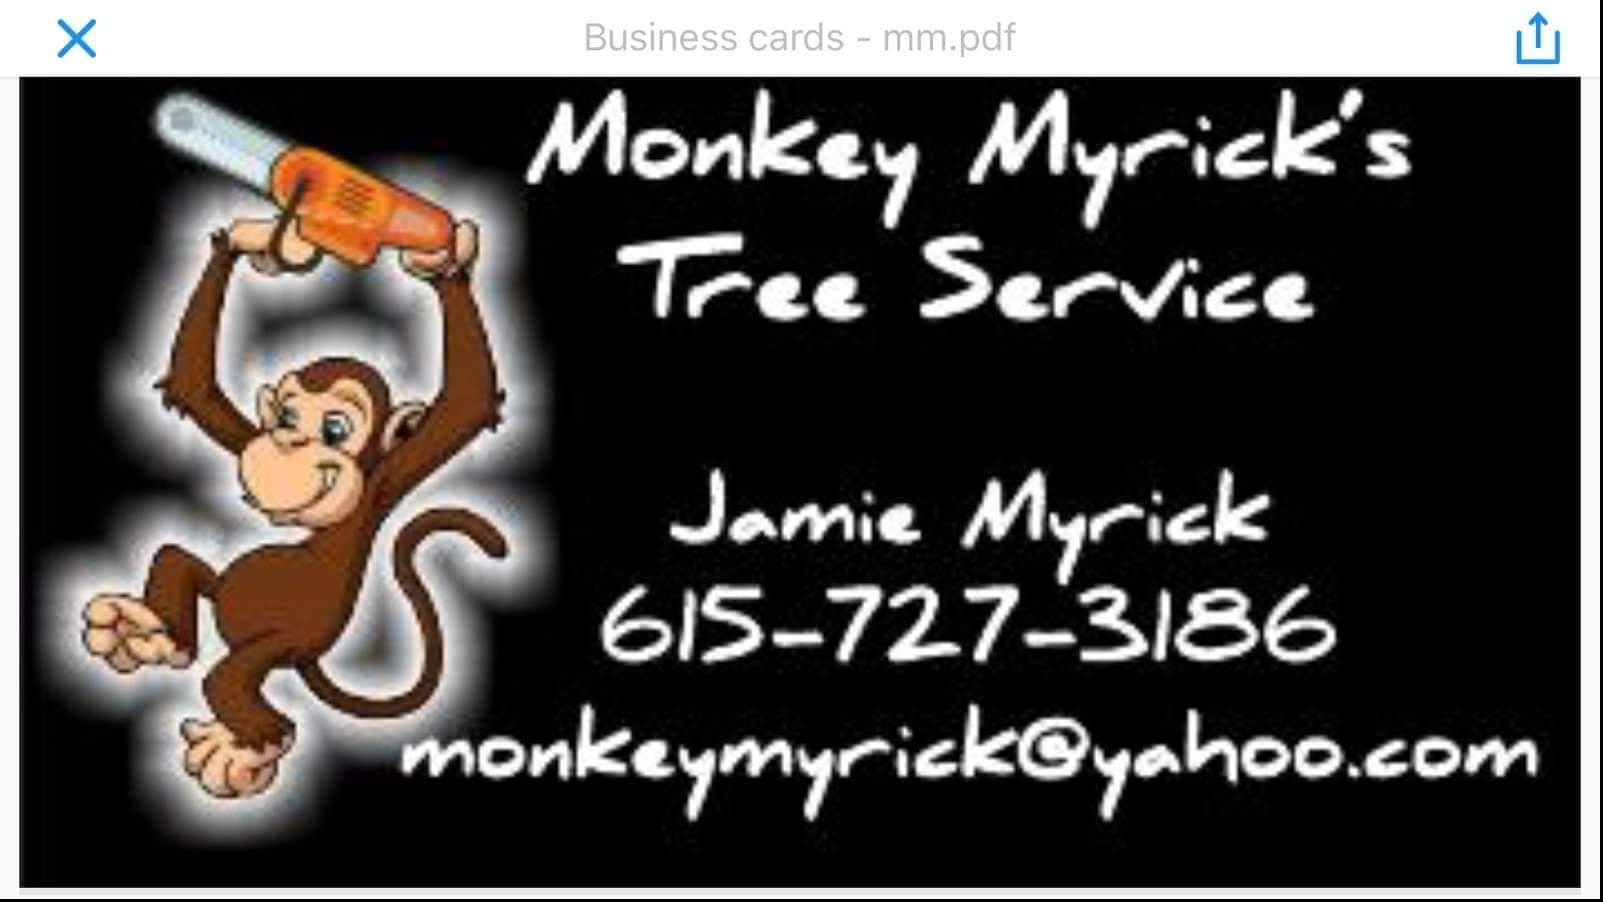 Monkey Myrick's Tree Service